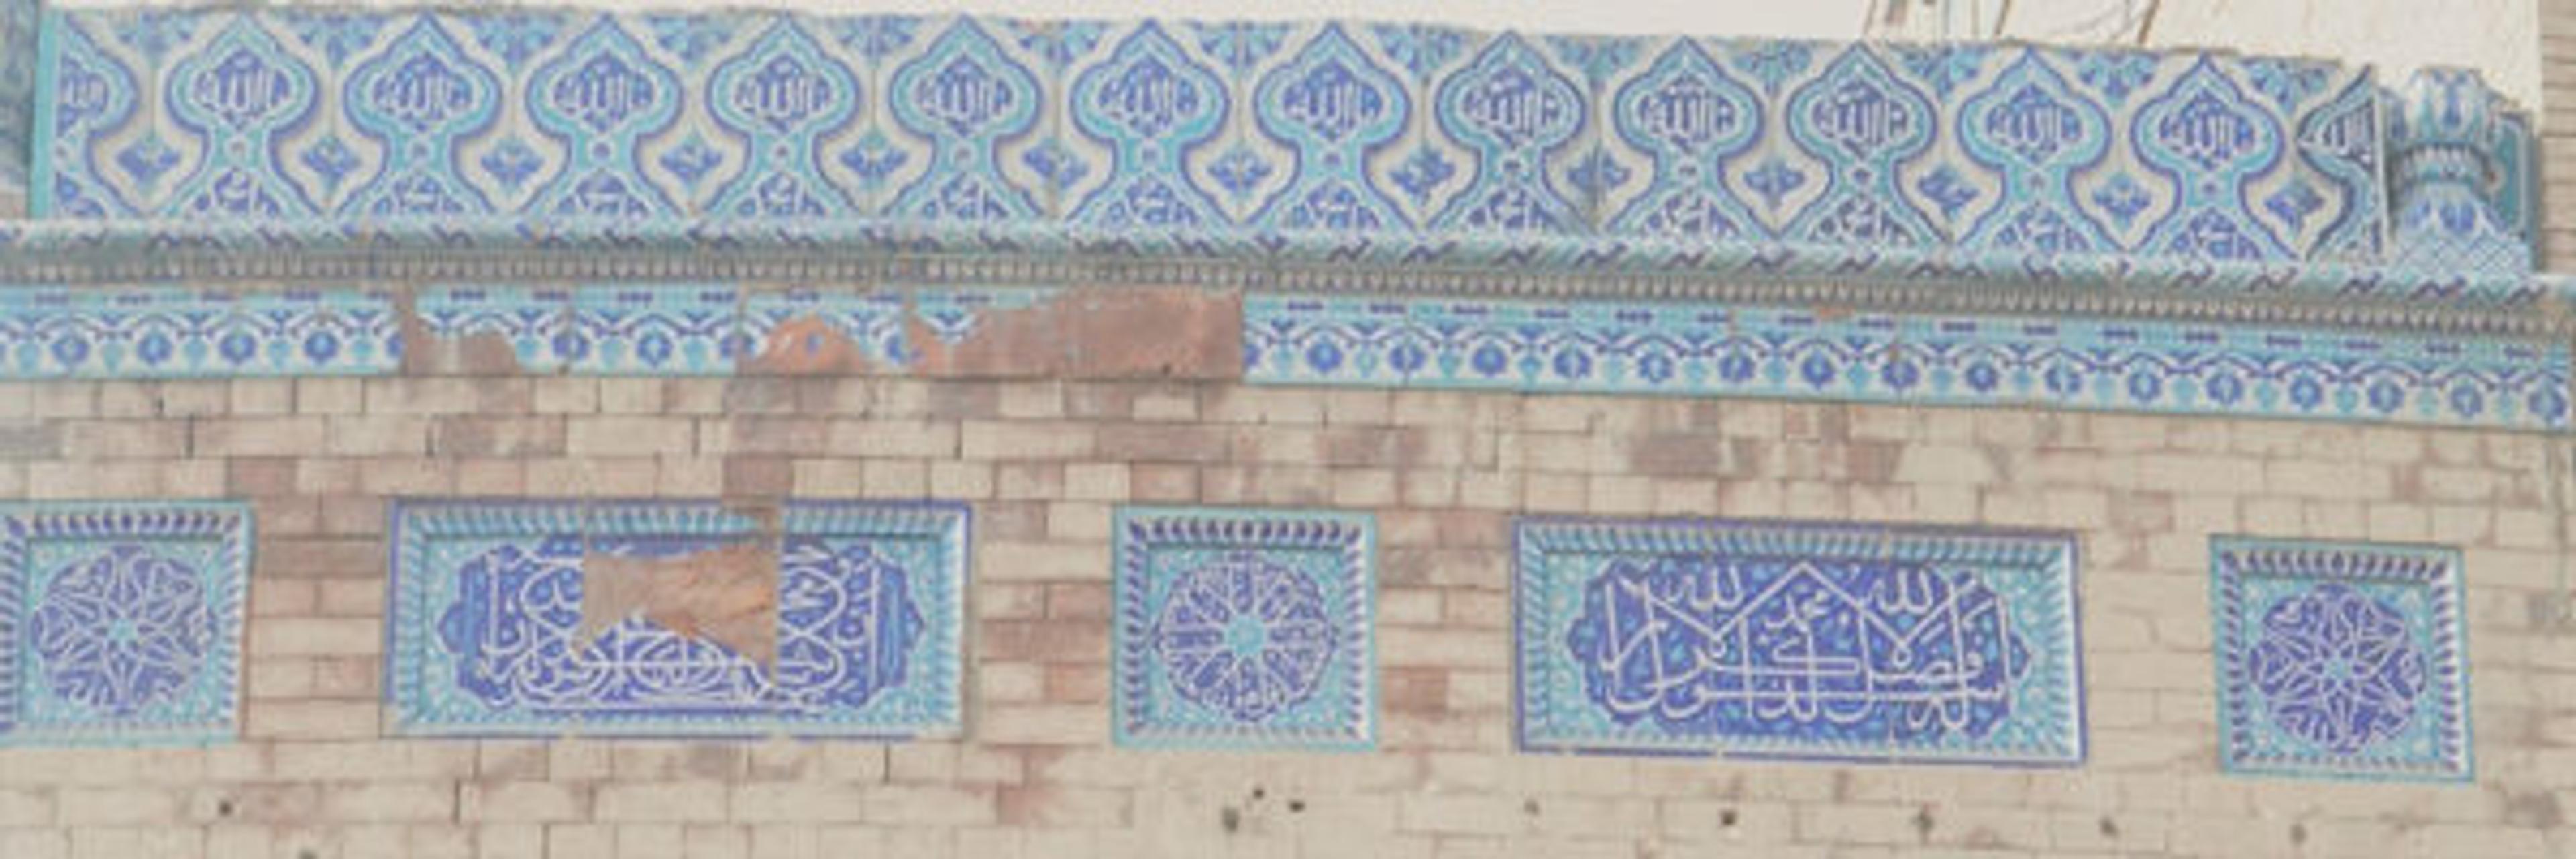 Detail of facade of the Tomb of of Baha’ al-Din Zakariya. Photograph courtesy of the author